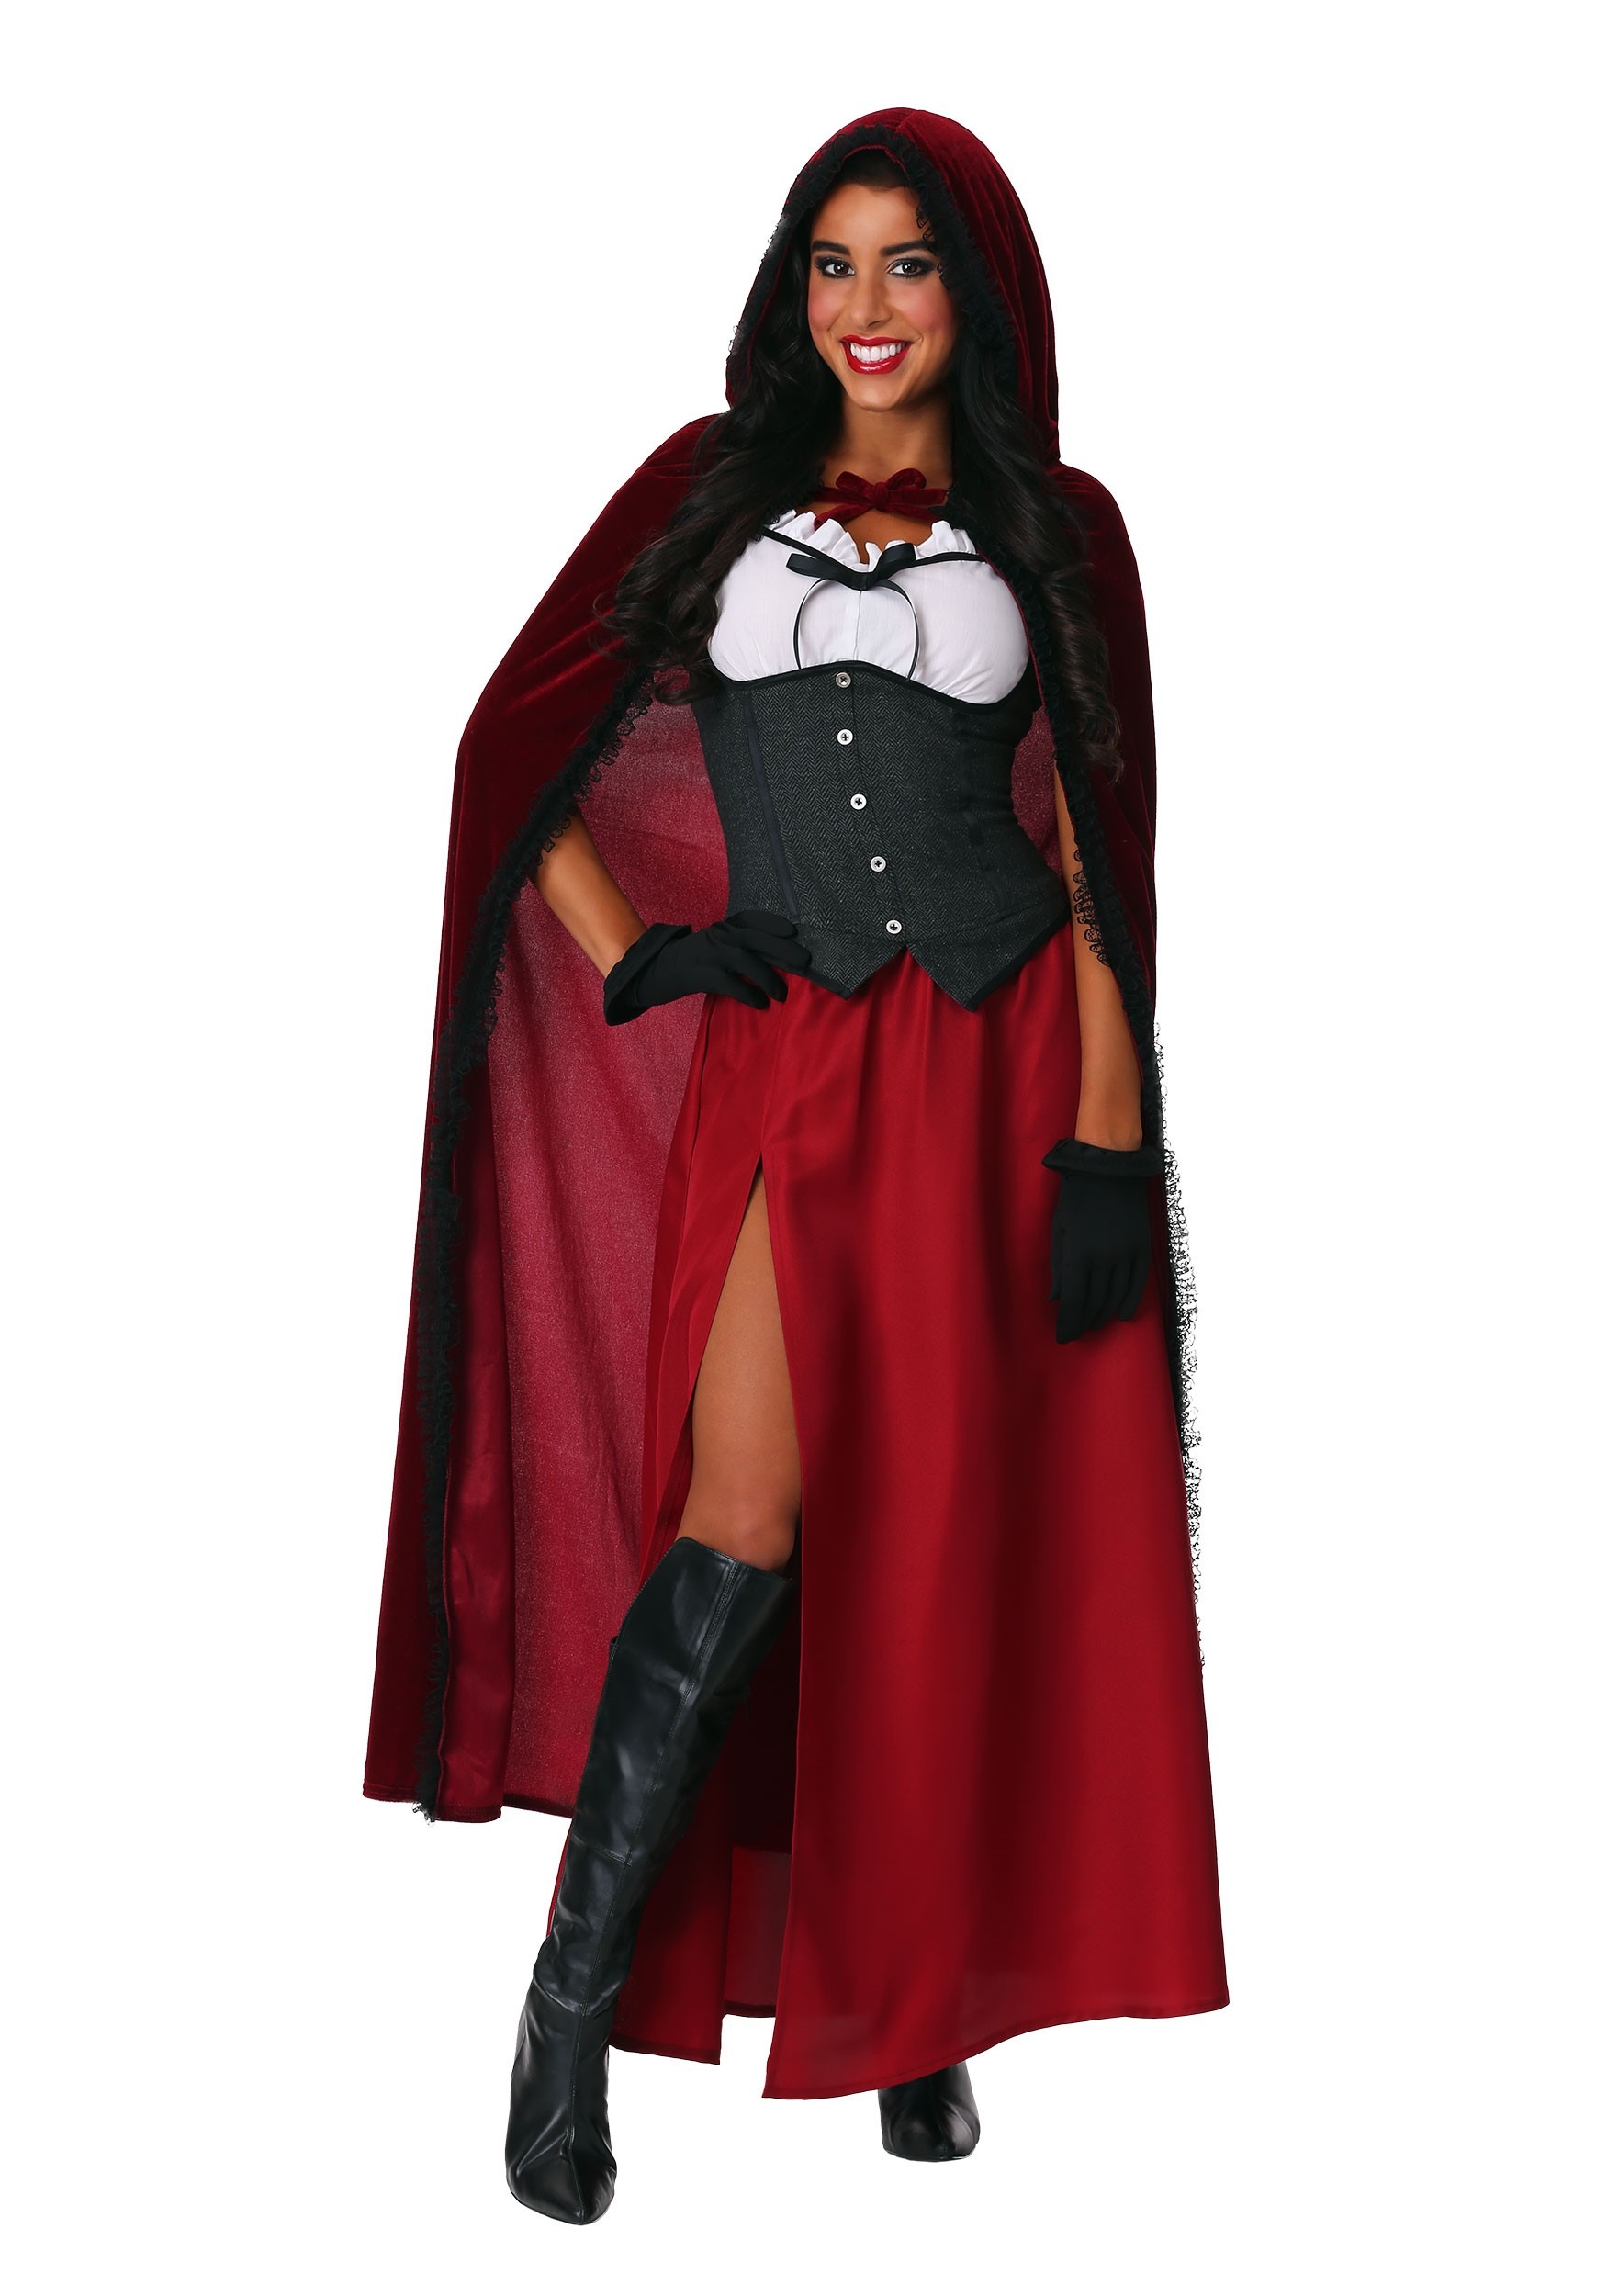 Photos - Fancy Dress FUN Costumes Ravishing Red Riding Hood Women's Costume Red/Gray/Wh